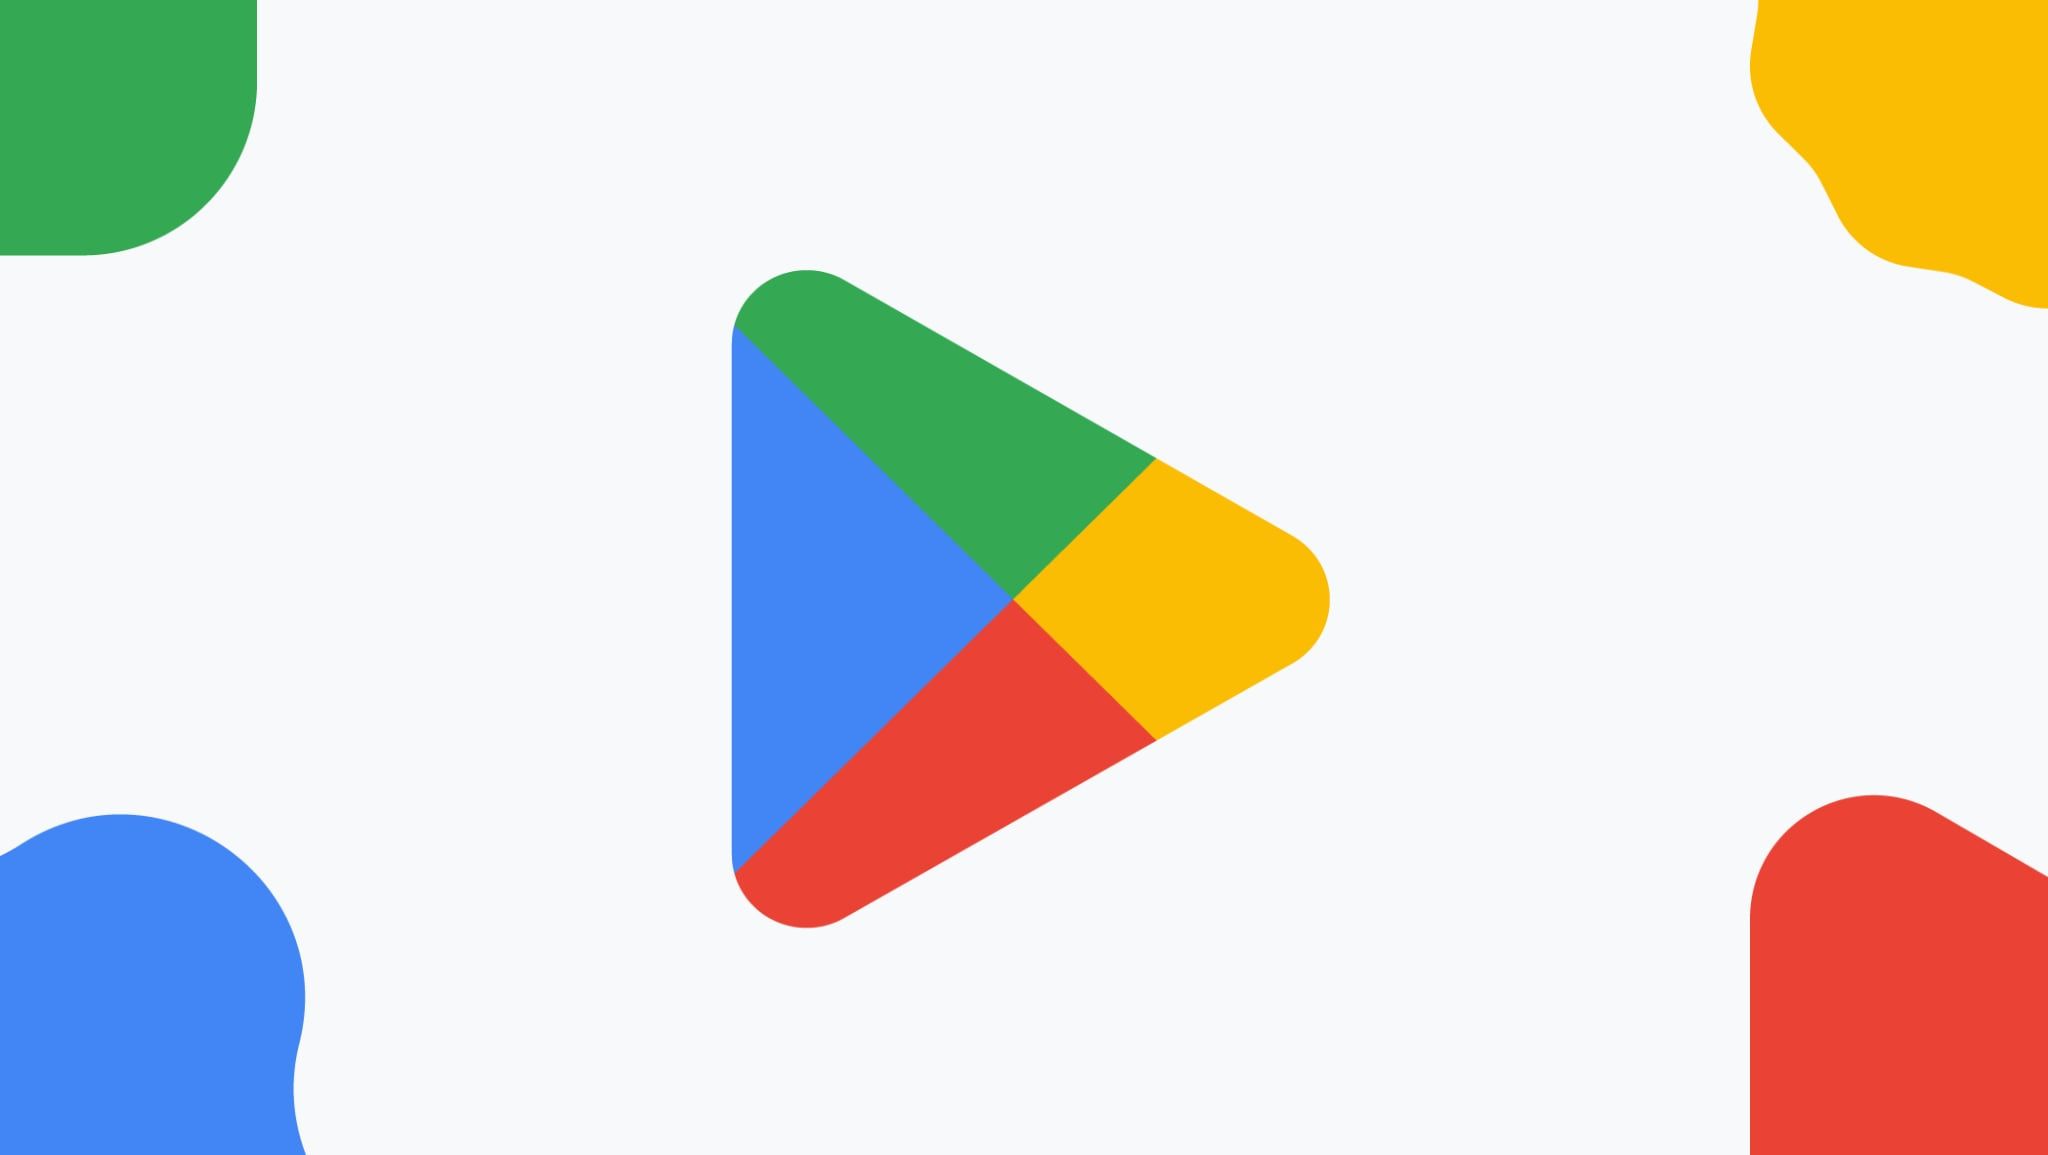 Google Play Store 